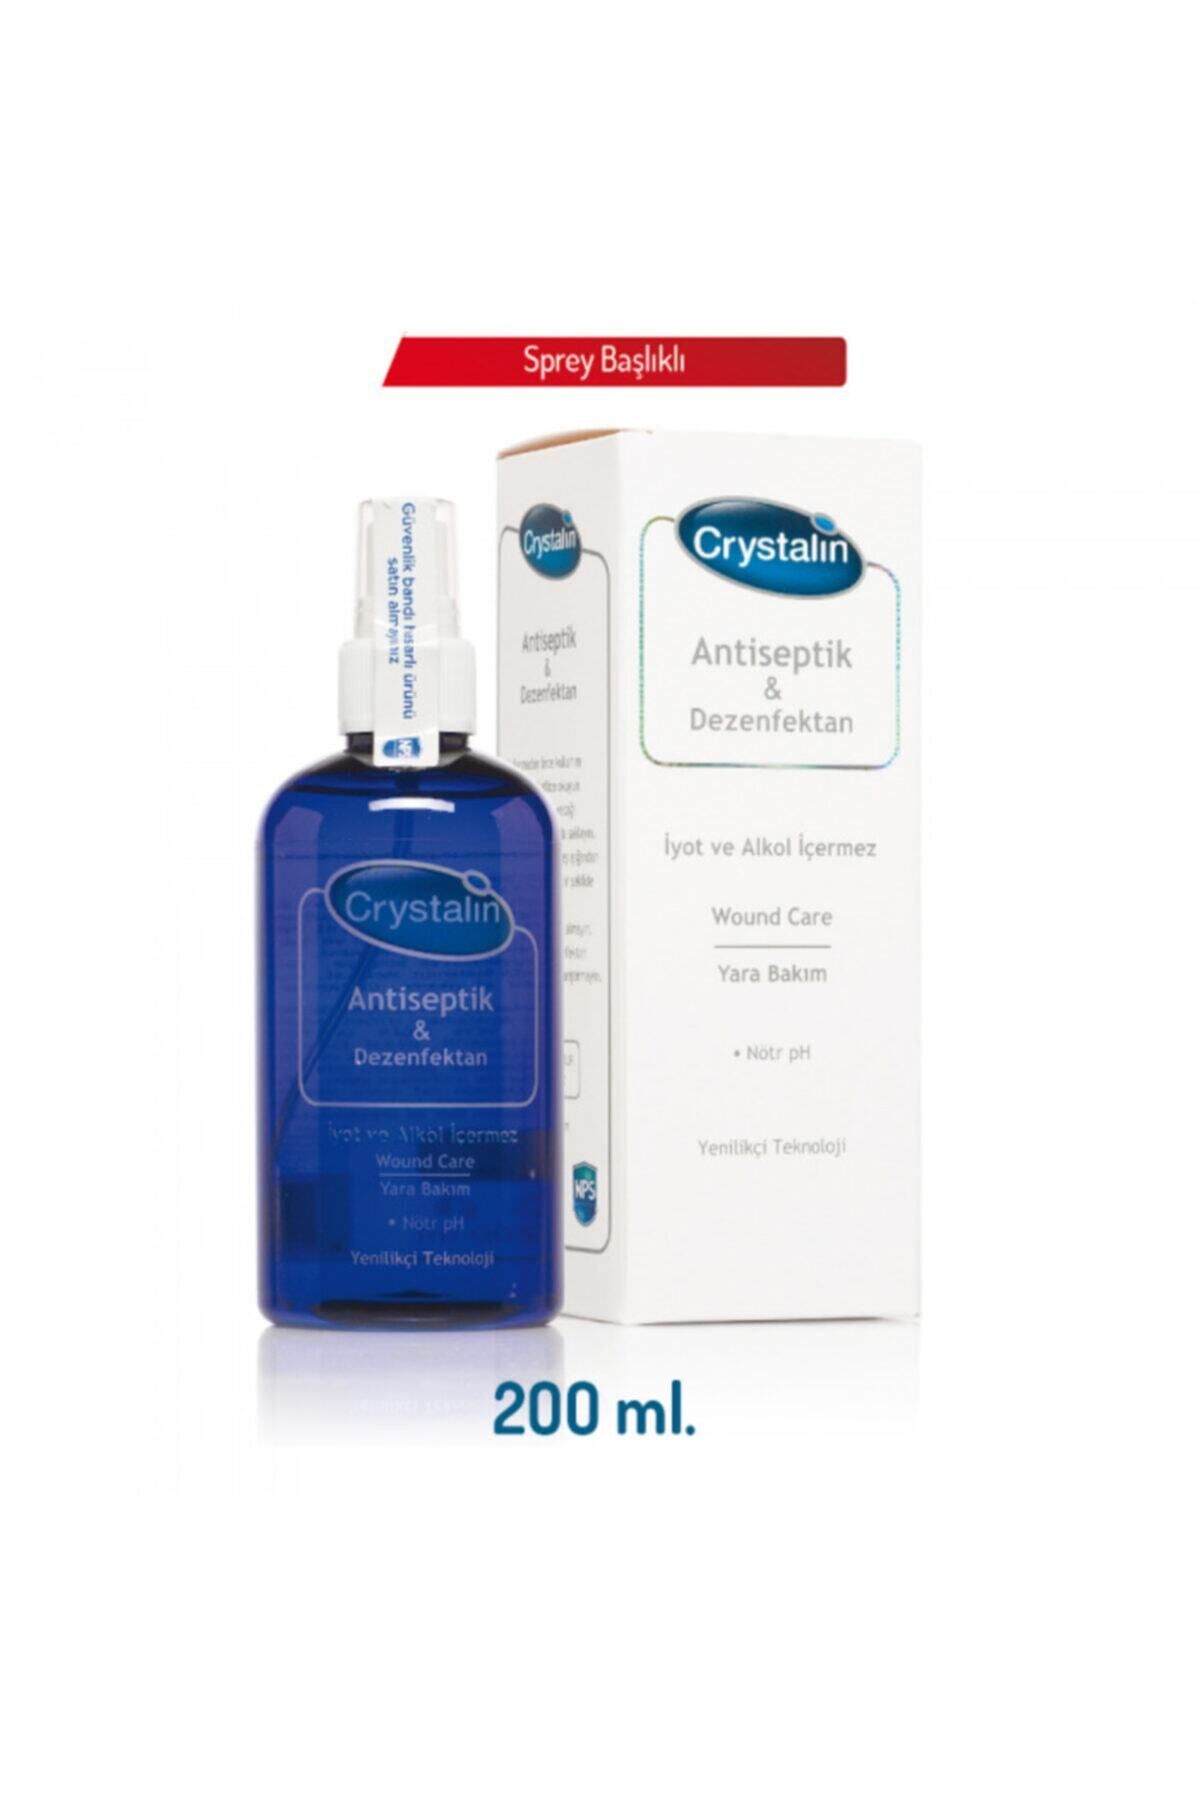 Crystalin Antiseptik & Dezenfektan 200 ml